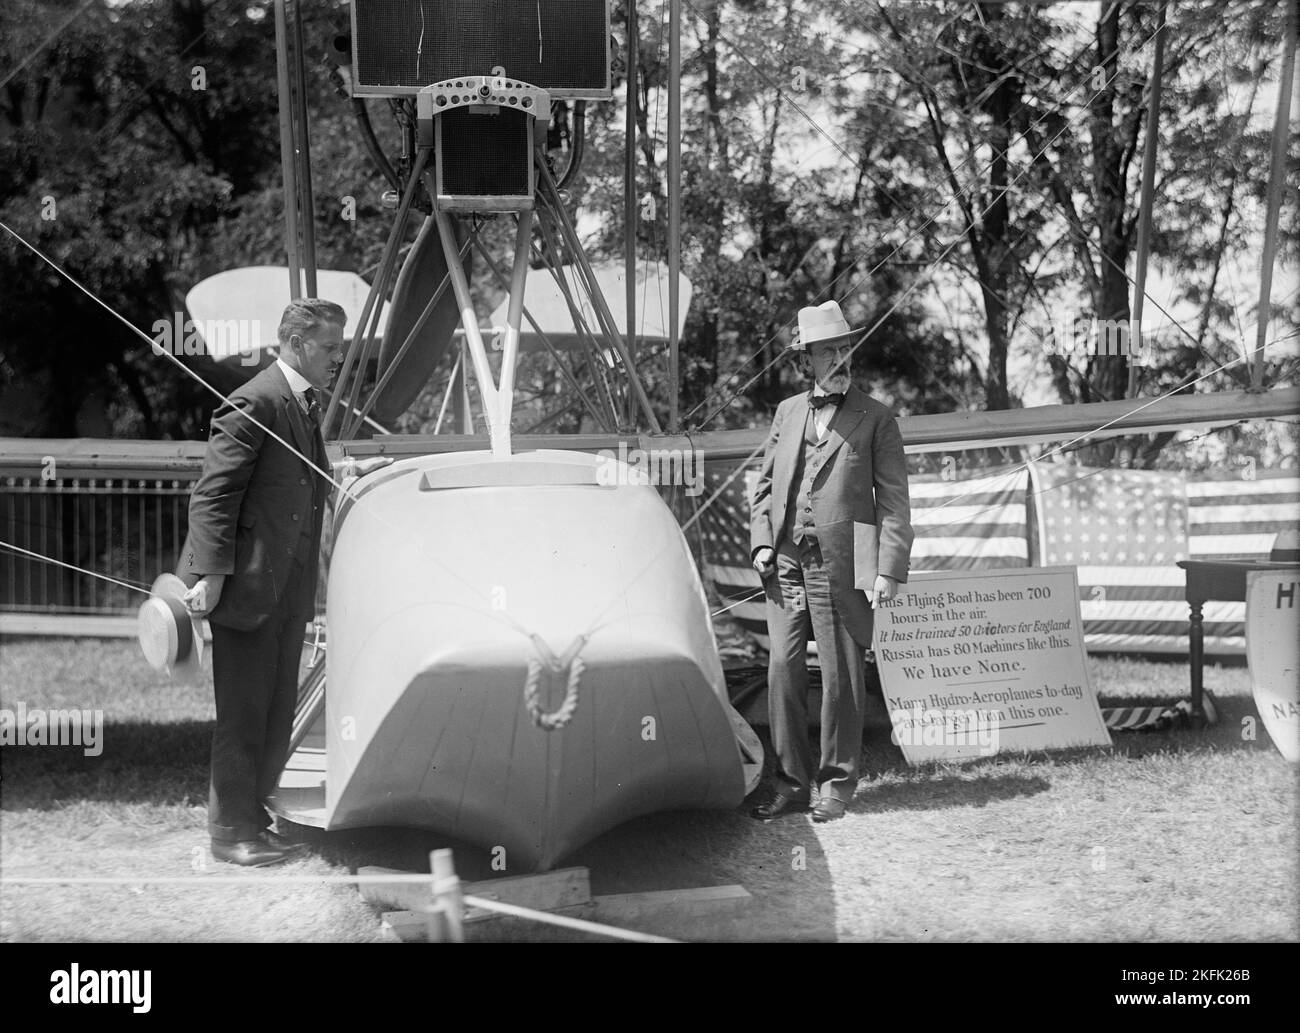 National Aero Coast Patrol Commn. - Curtiss Hydroaeroplane or Flying Boat Exhibited Near House Office Building, Capt. Taylor And Senator Kern, 1917. Stock Photo